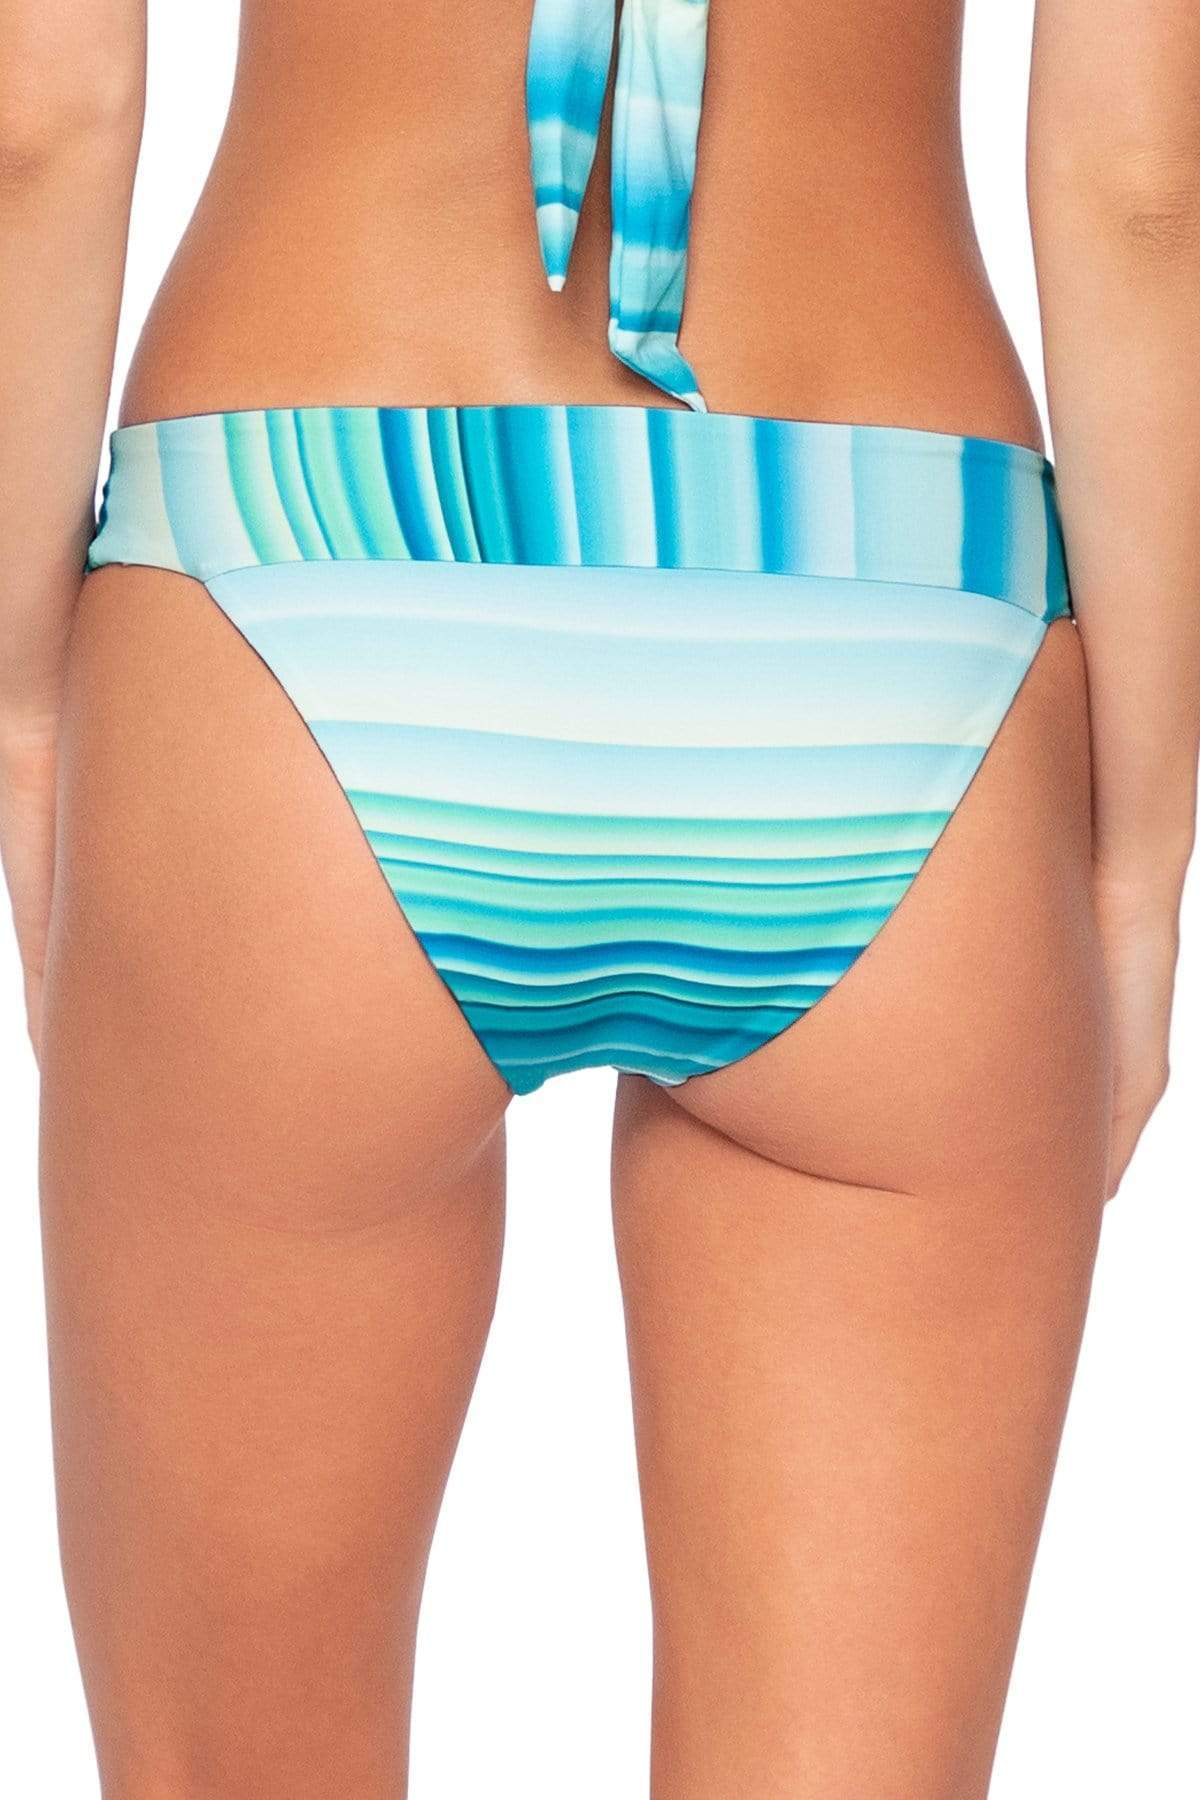 Bestswimwear -  Swim Systems Ocean Oasis Bliss Banded Bottom